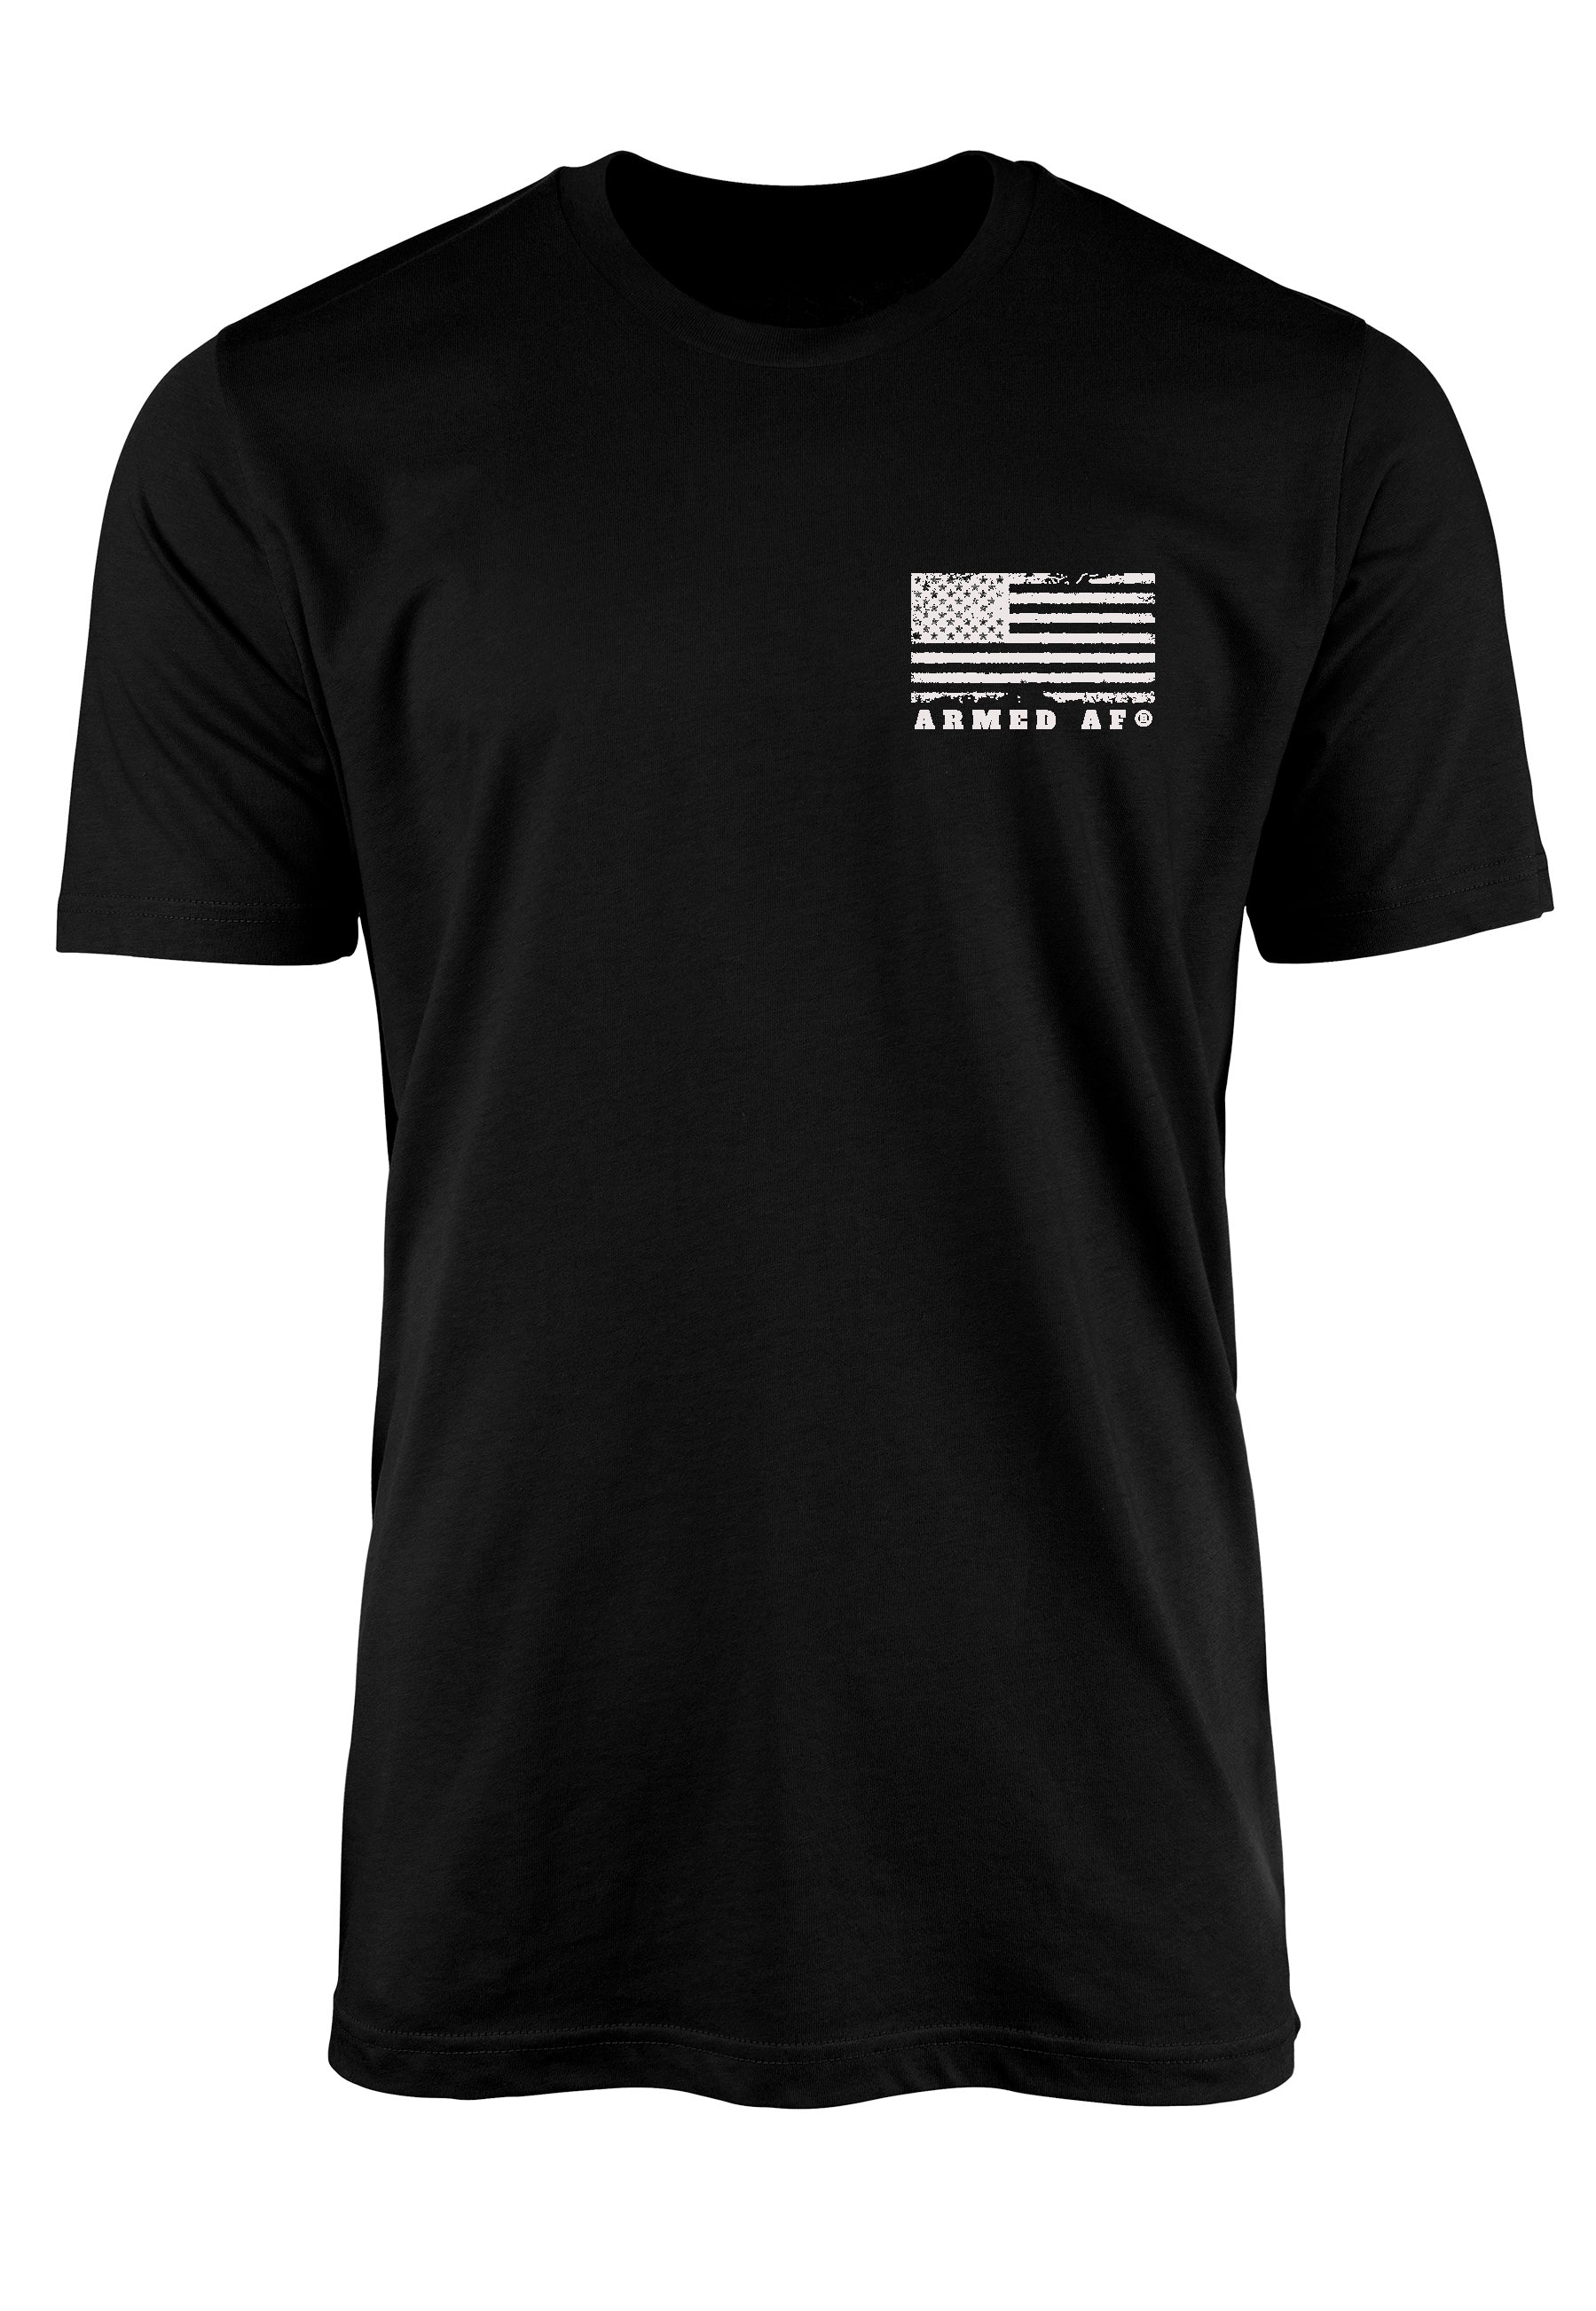 Armed Af chest print on t-shirt